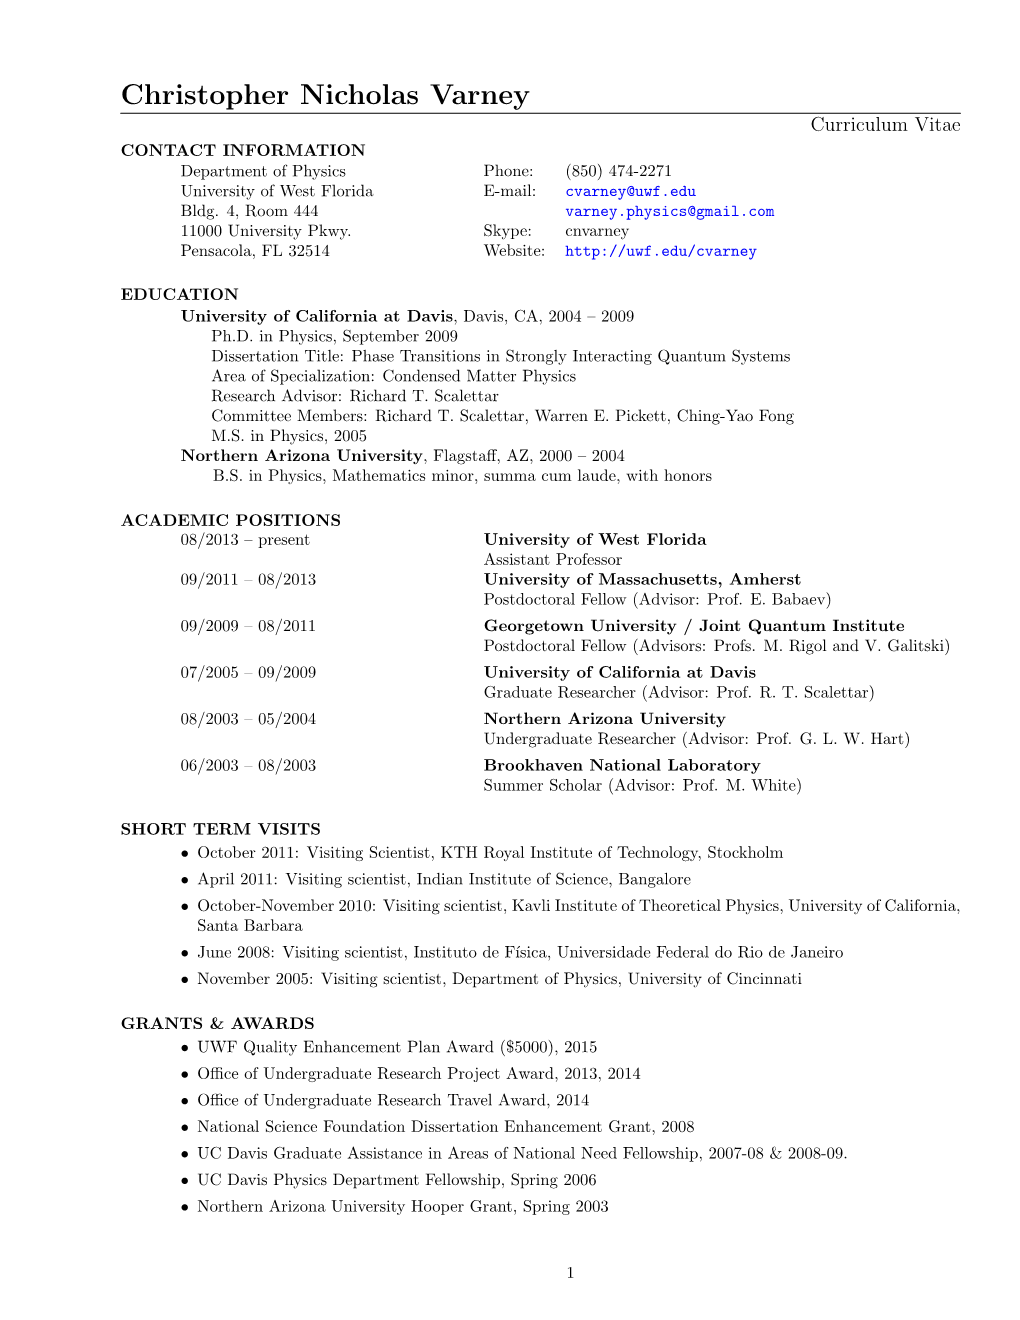 Curriculum Vitae CONTACT INFORMATION Department of Physics Phone: (850) 474-2271 University of West Florida E-Mail: Cvarney@Uwf.Edu Bldg